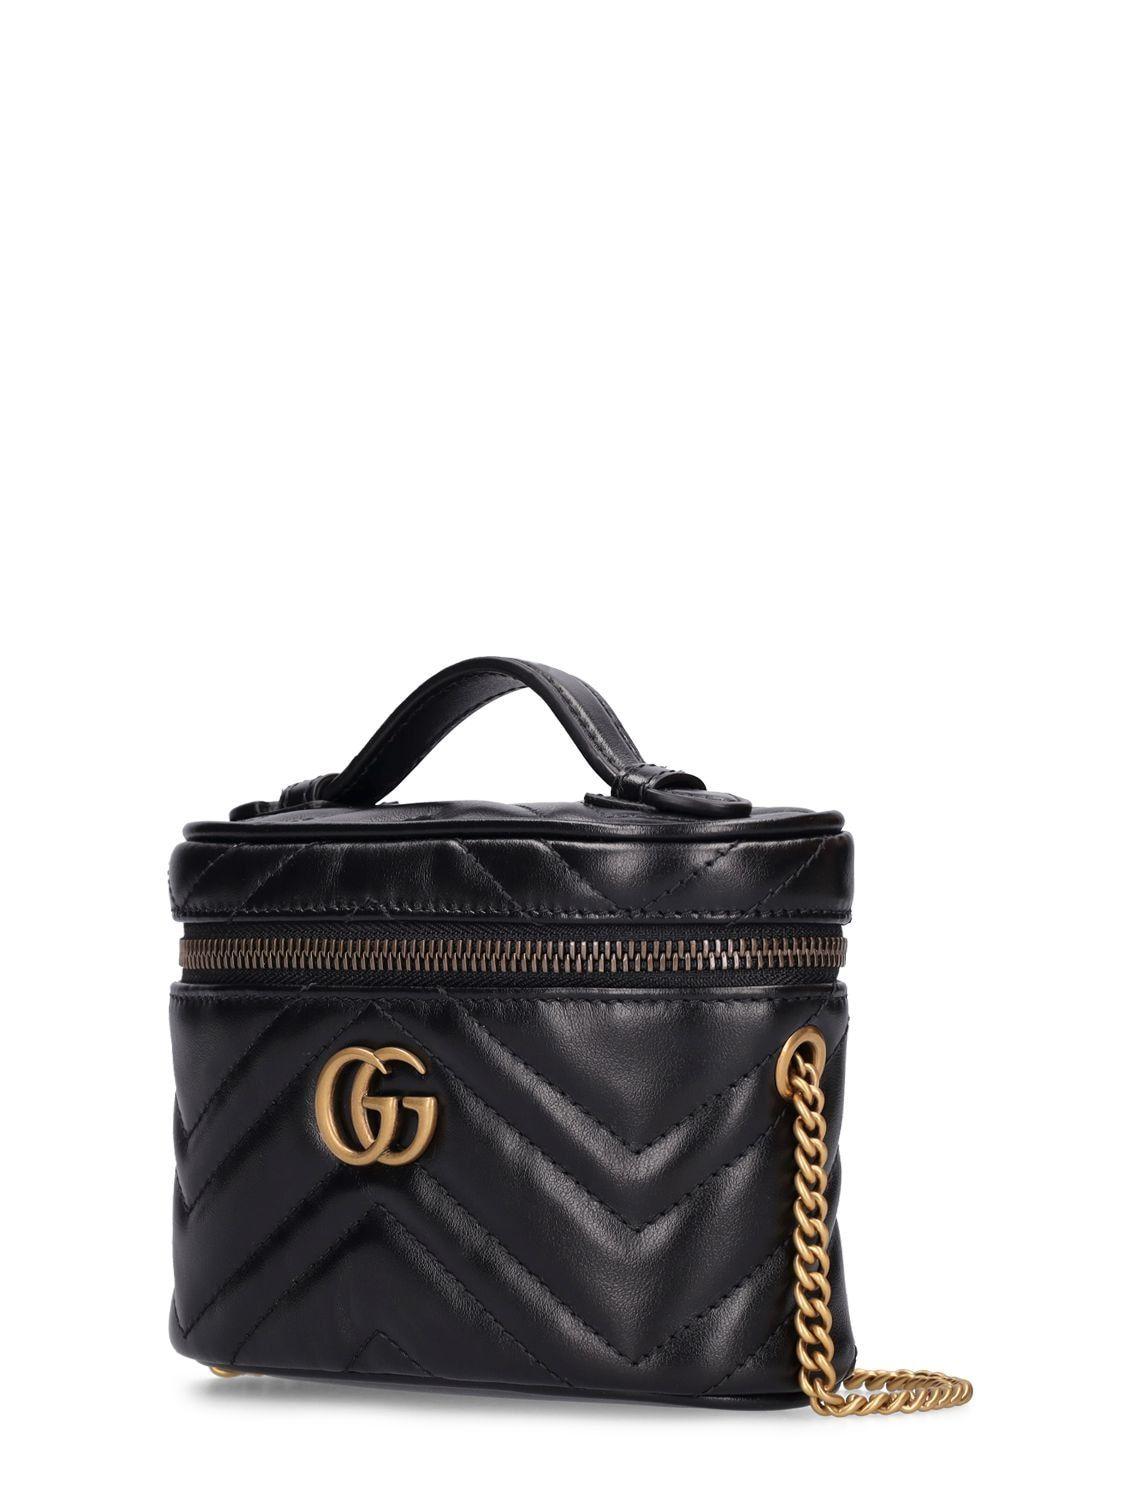 GG Marmont Leather Shoulder Bag in Black - Gucci